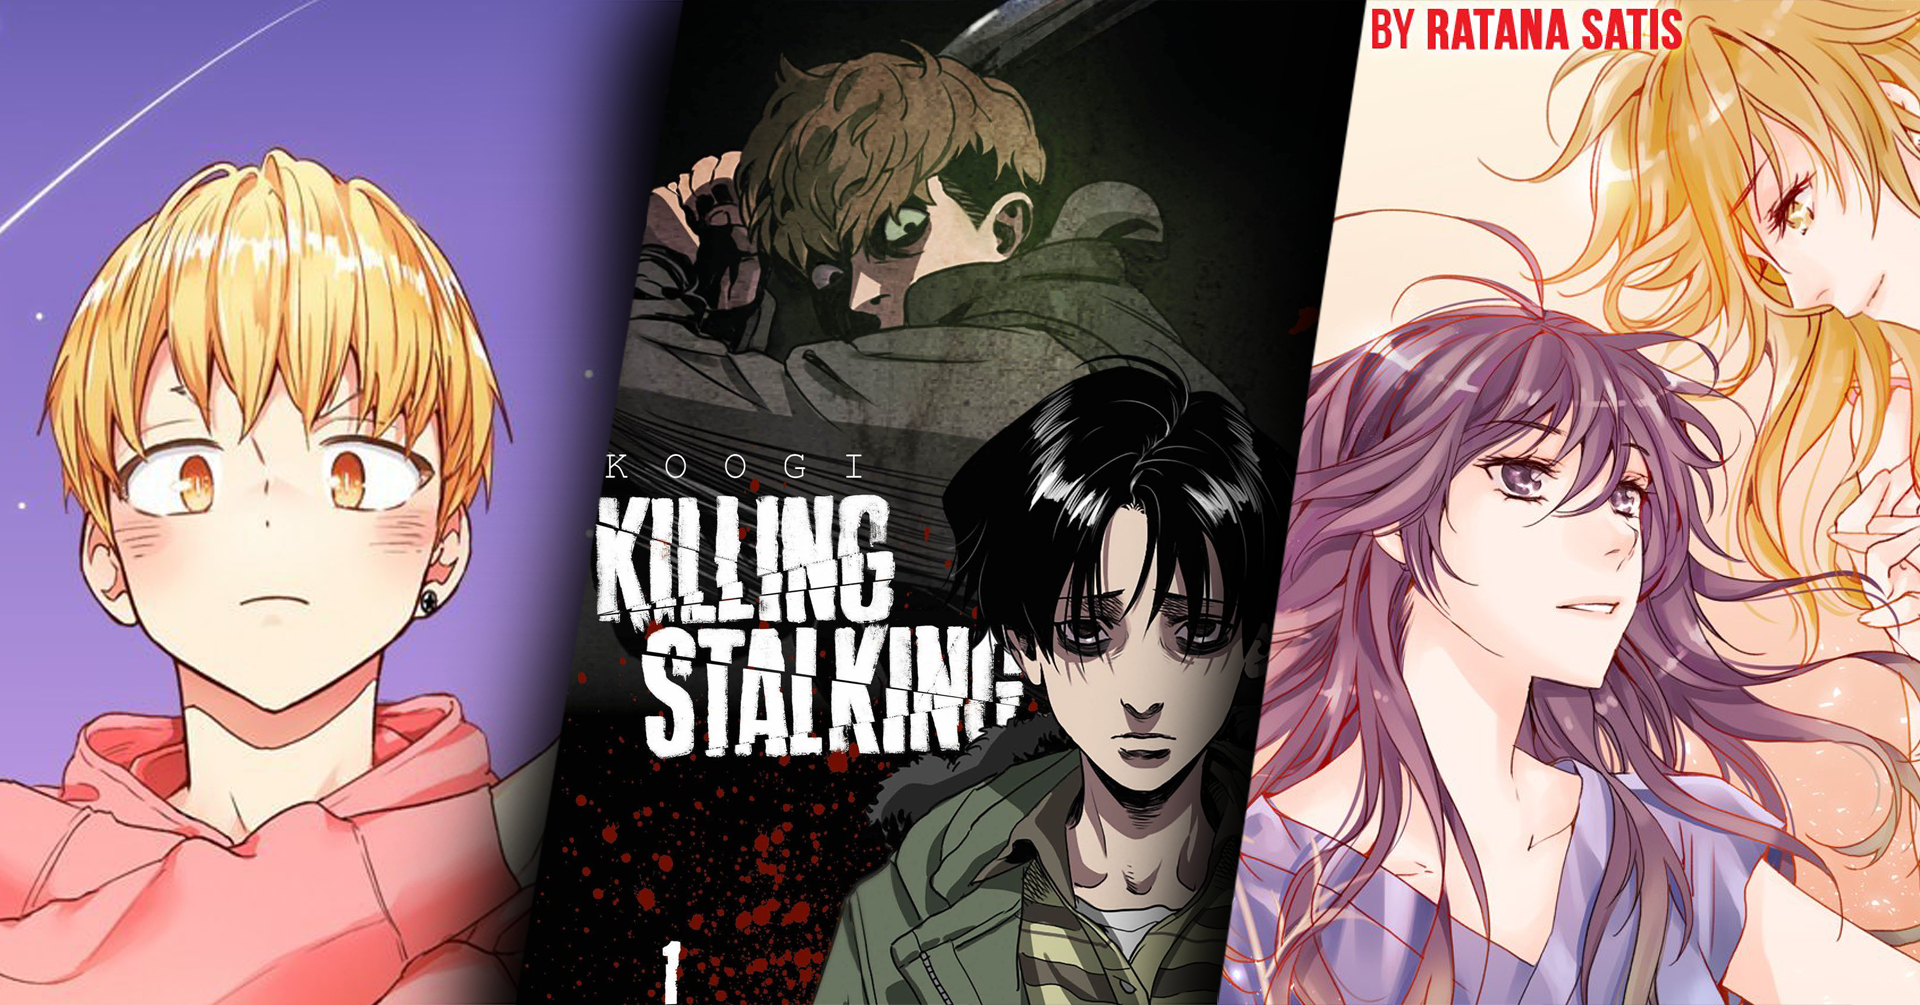 Killing Stalking Manhwa Book Vol.7 [Korean Ver.]